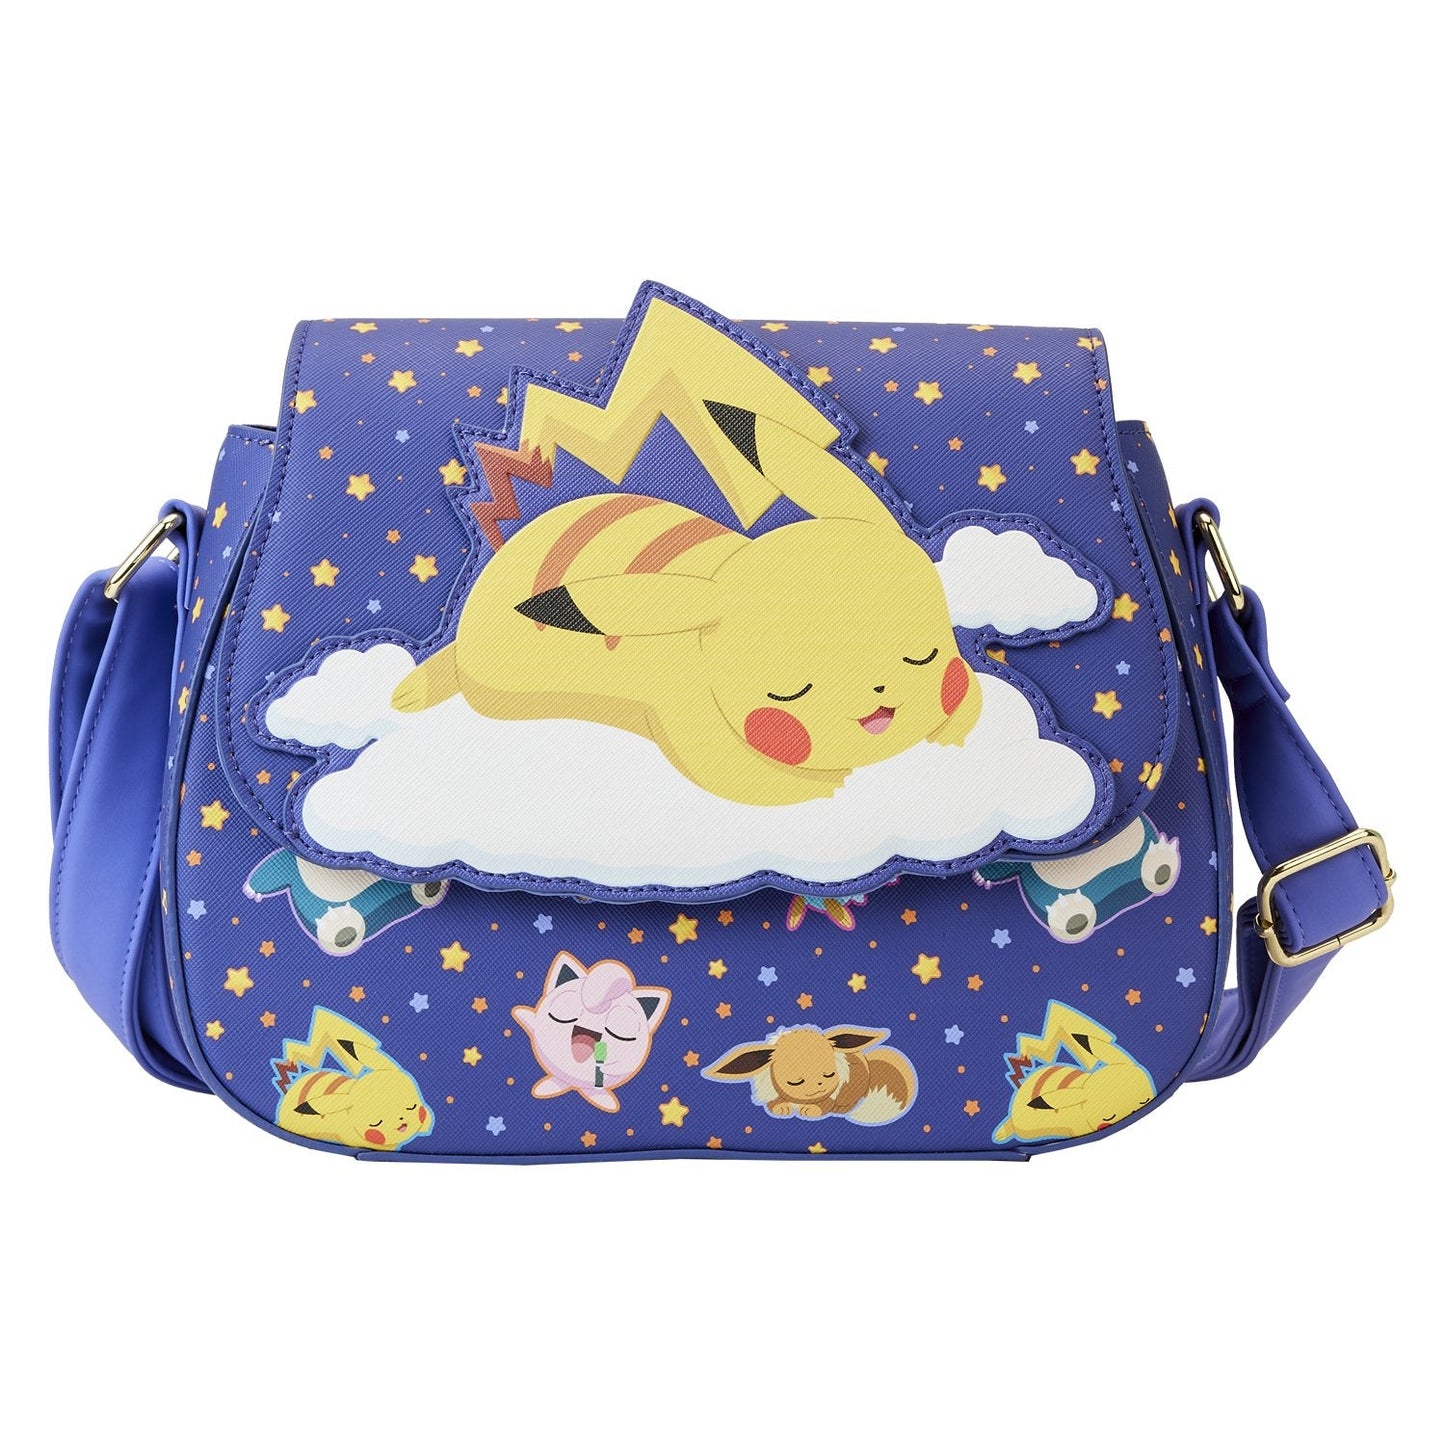 Sleeping Pikachu and Friends cross body bag